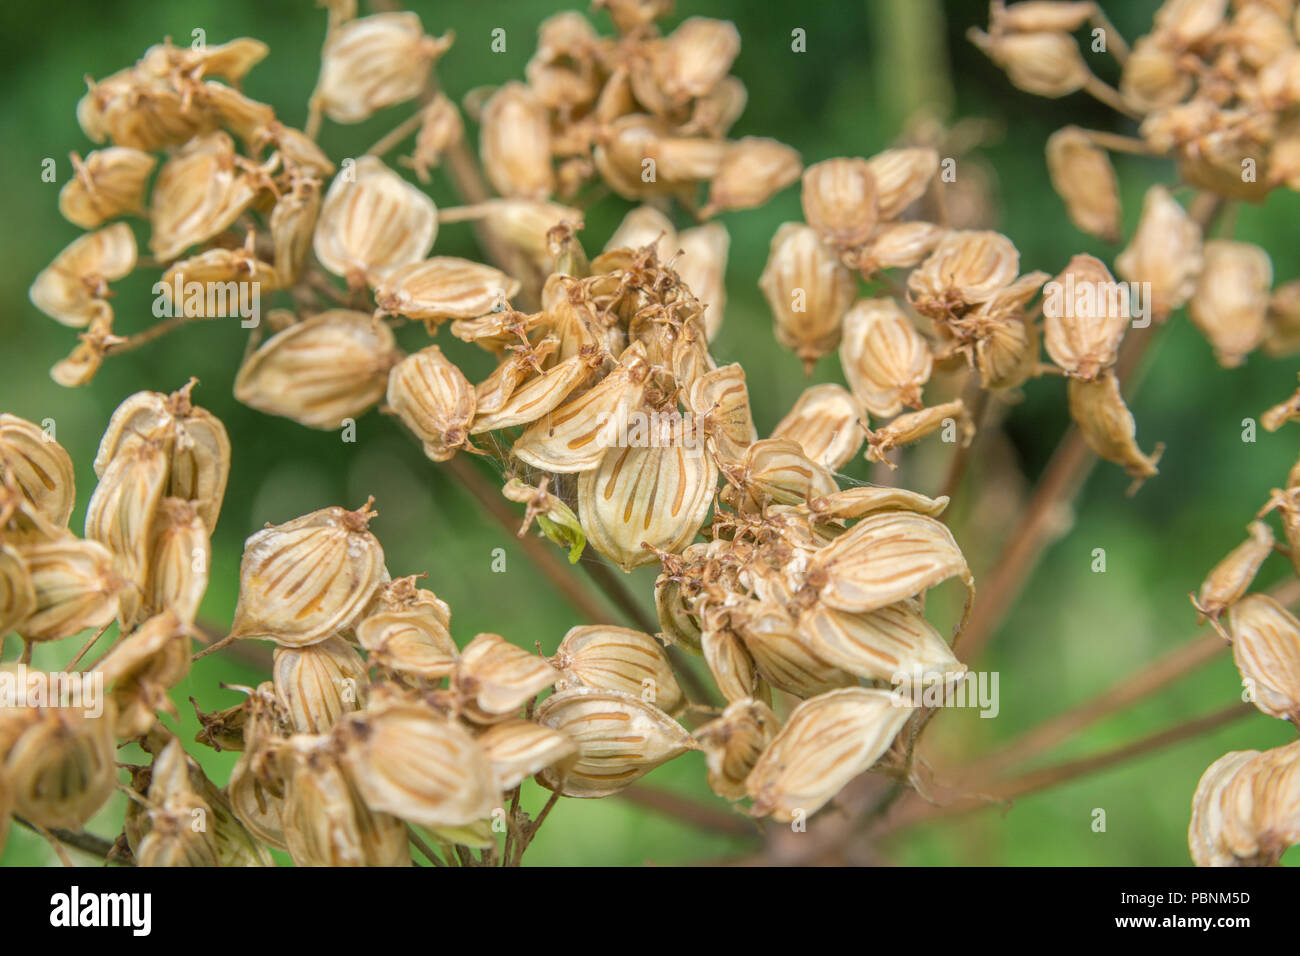 Mature ripe seeds of Hogweed / Heracleum sphondylium showing streaked vittae. Cow parsley family. Stock Photo